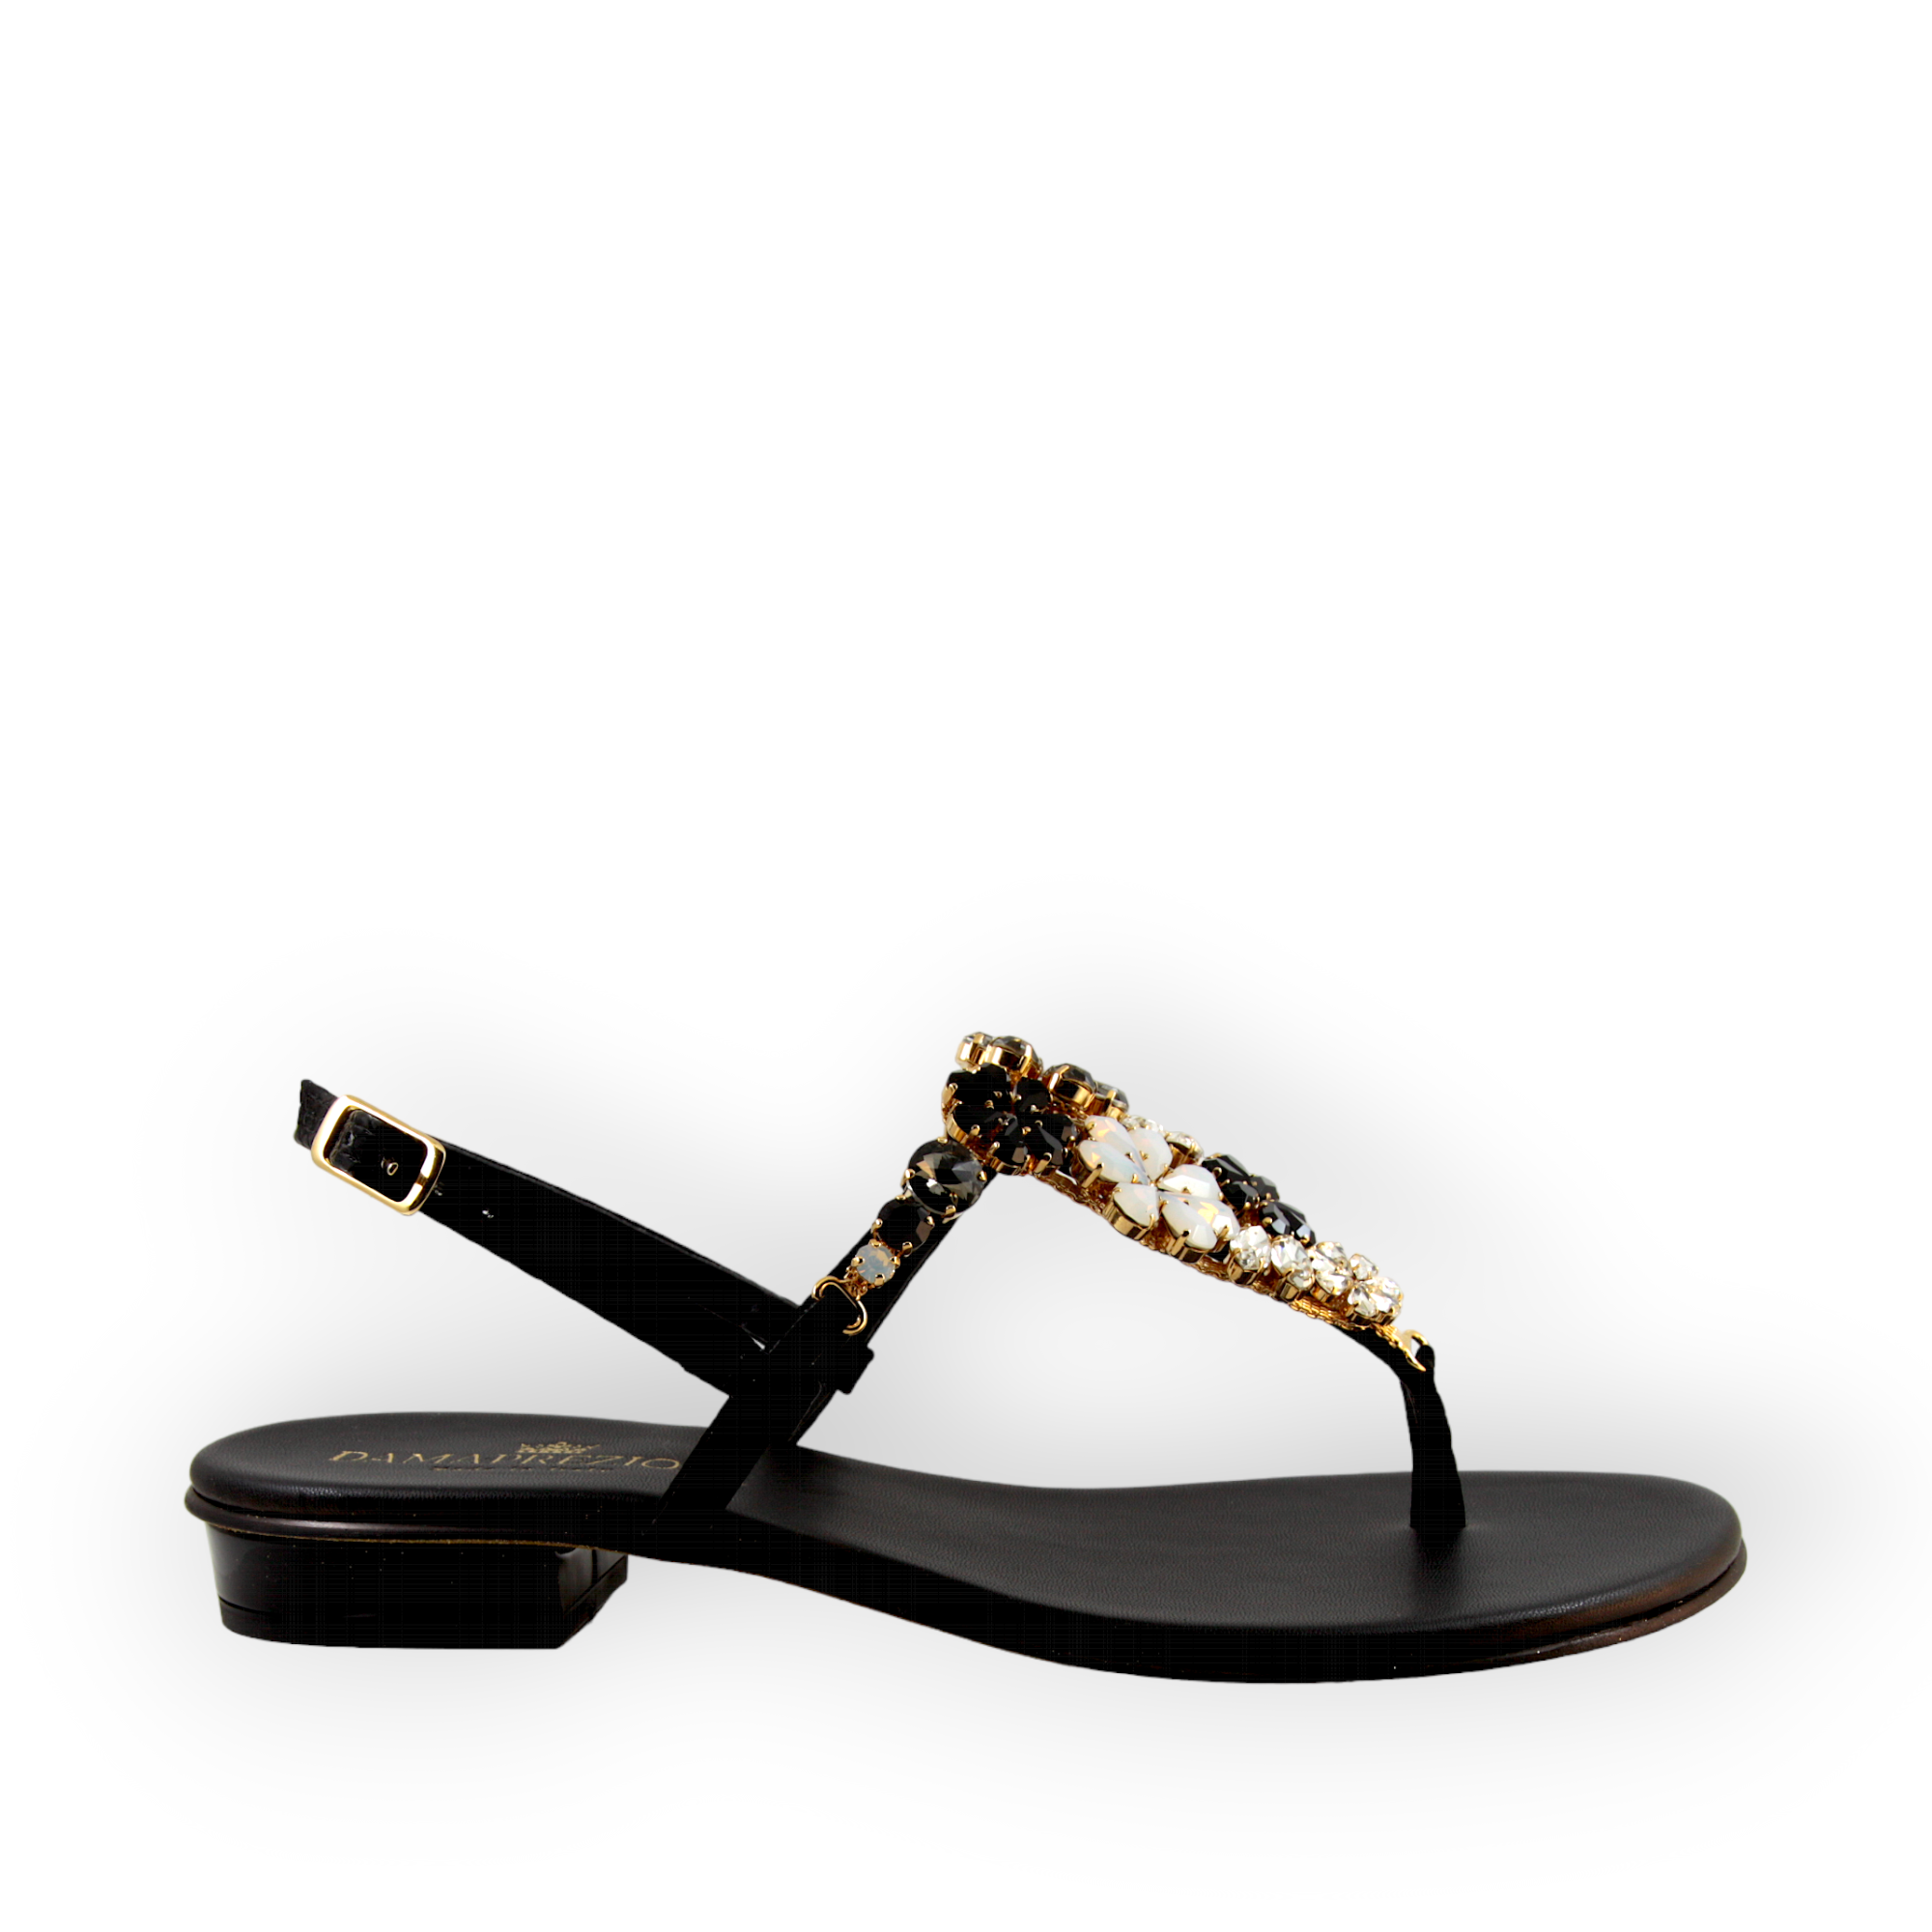 Gilda Black Sandals With Crystals.